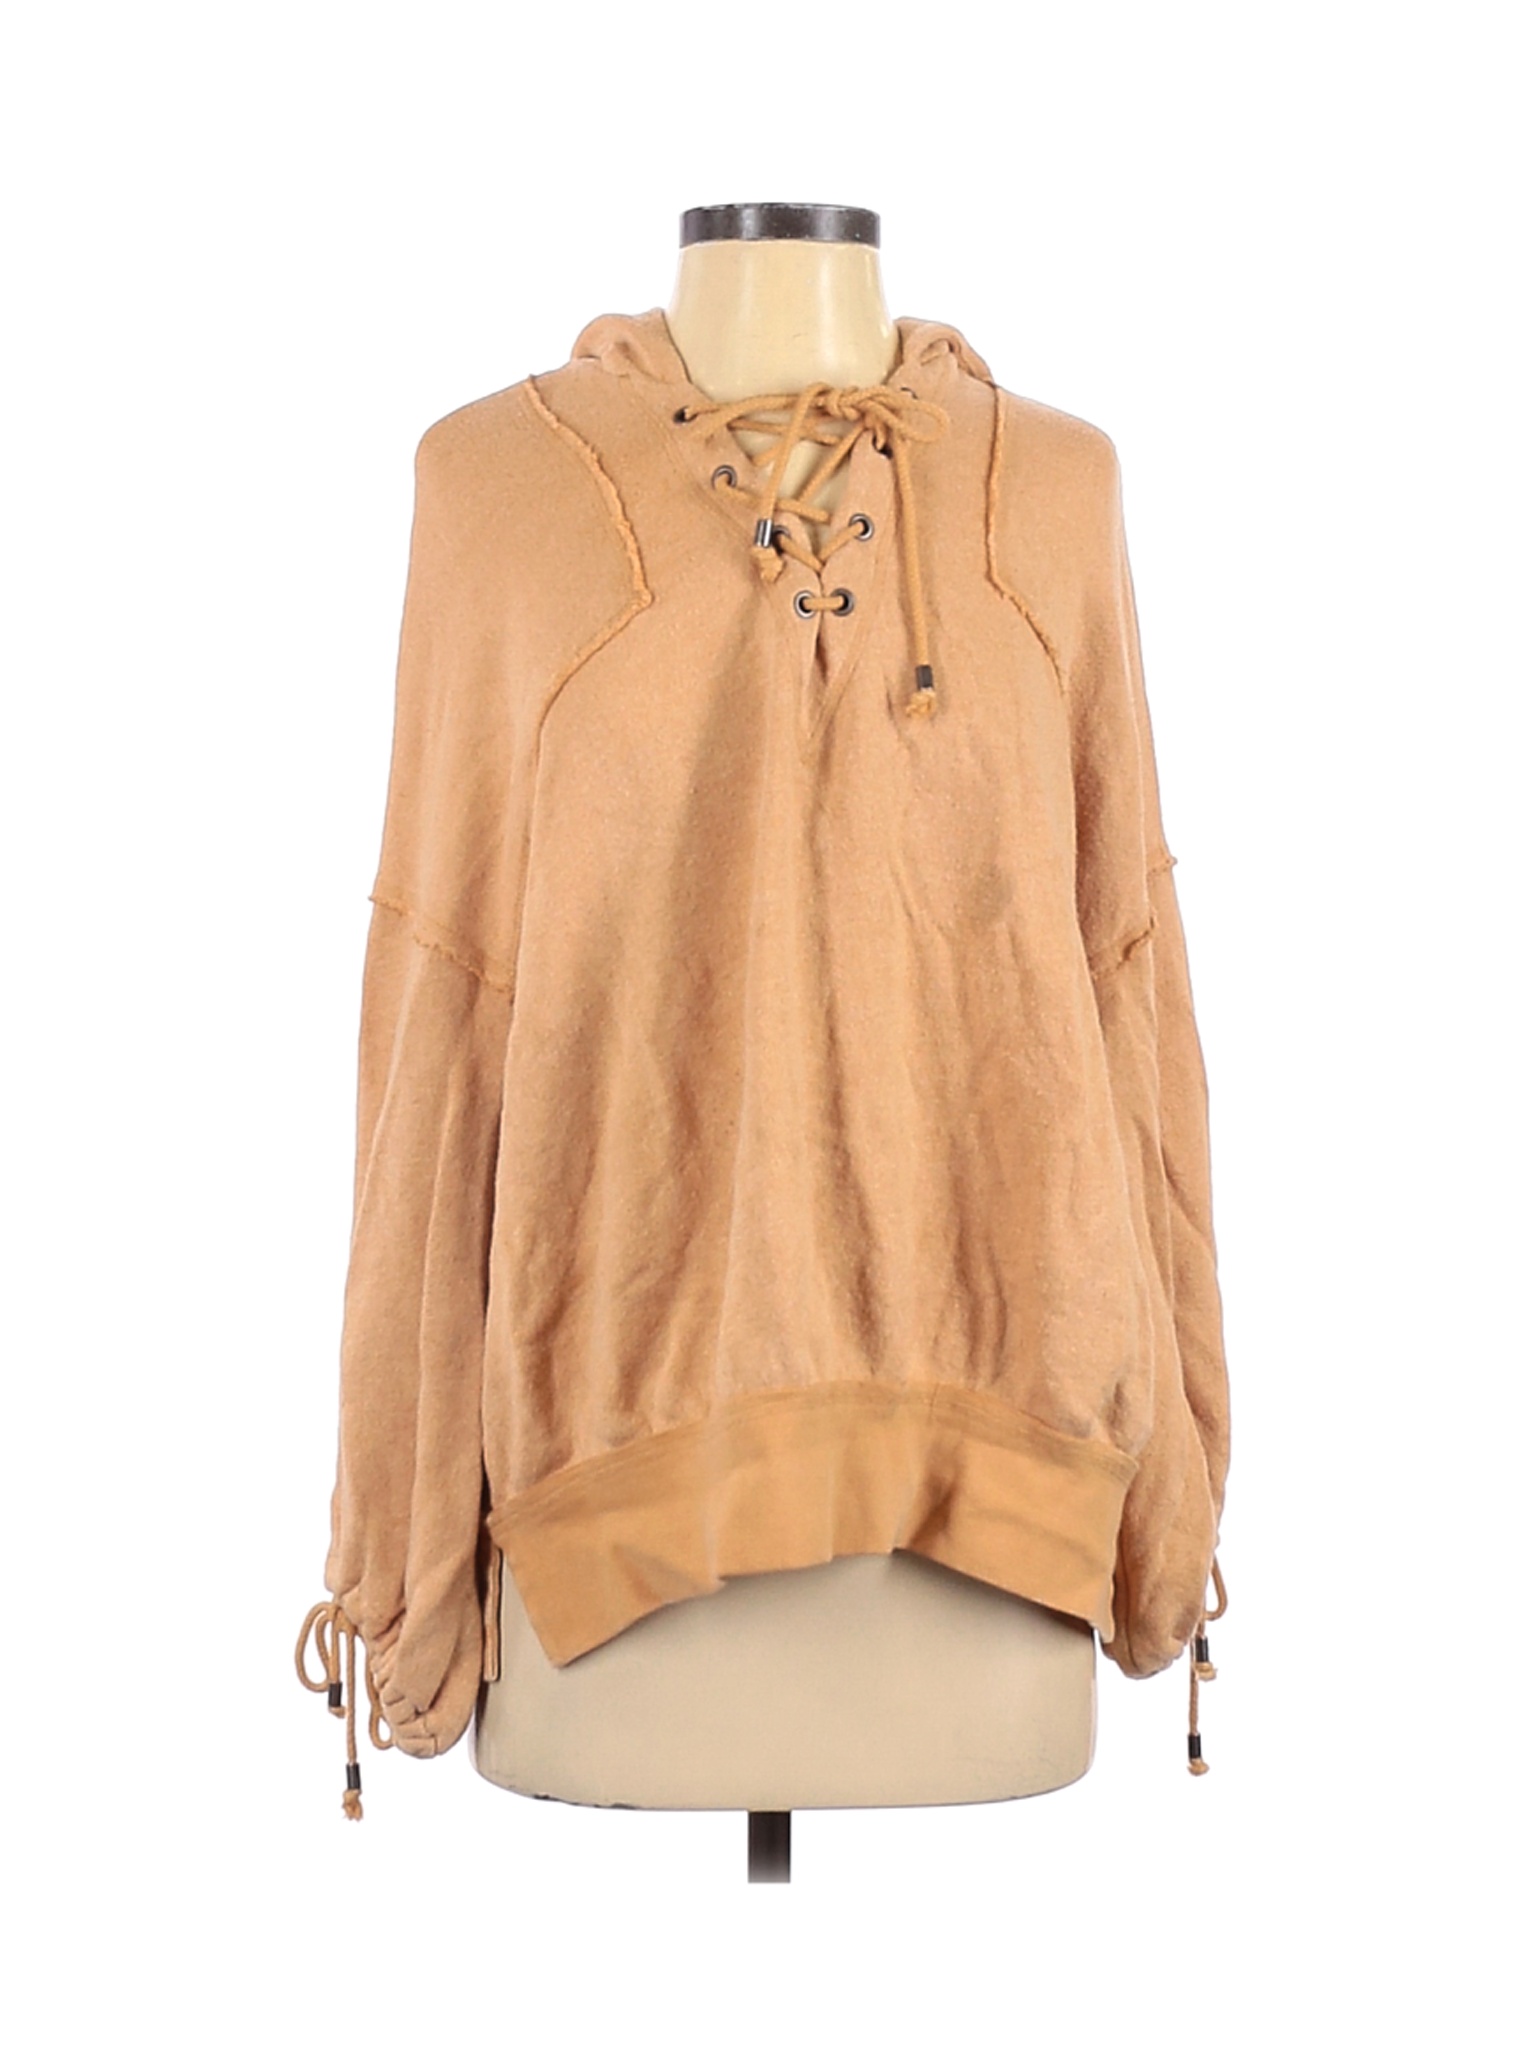 Free People Women Brown Pullover Sweater XS | eBay